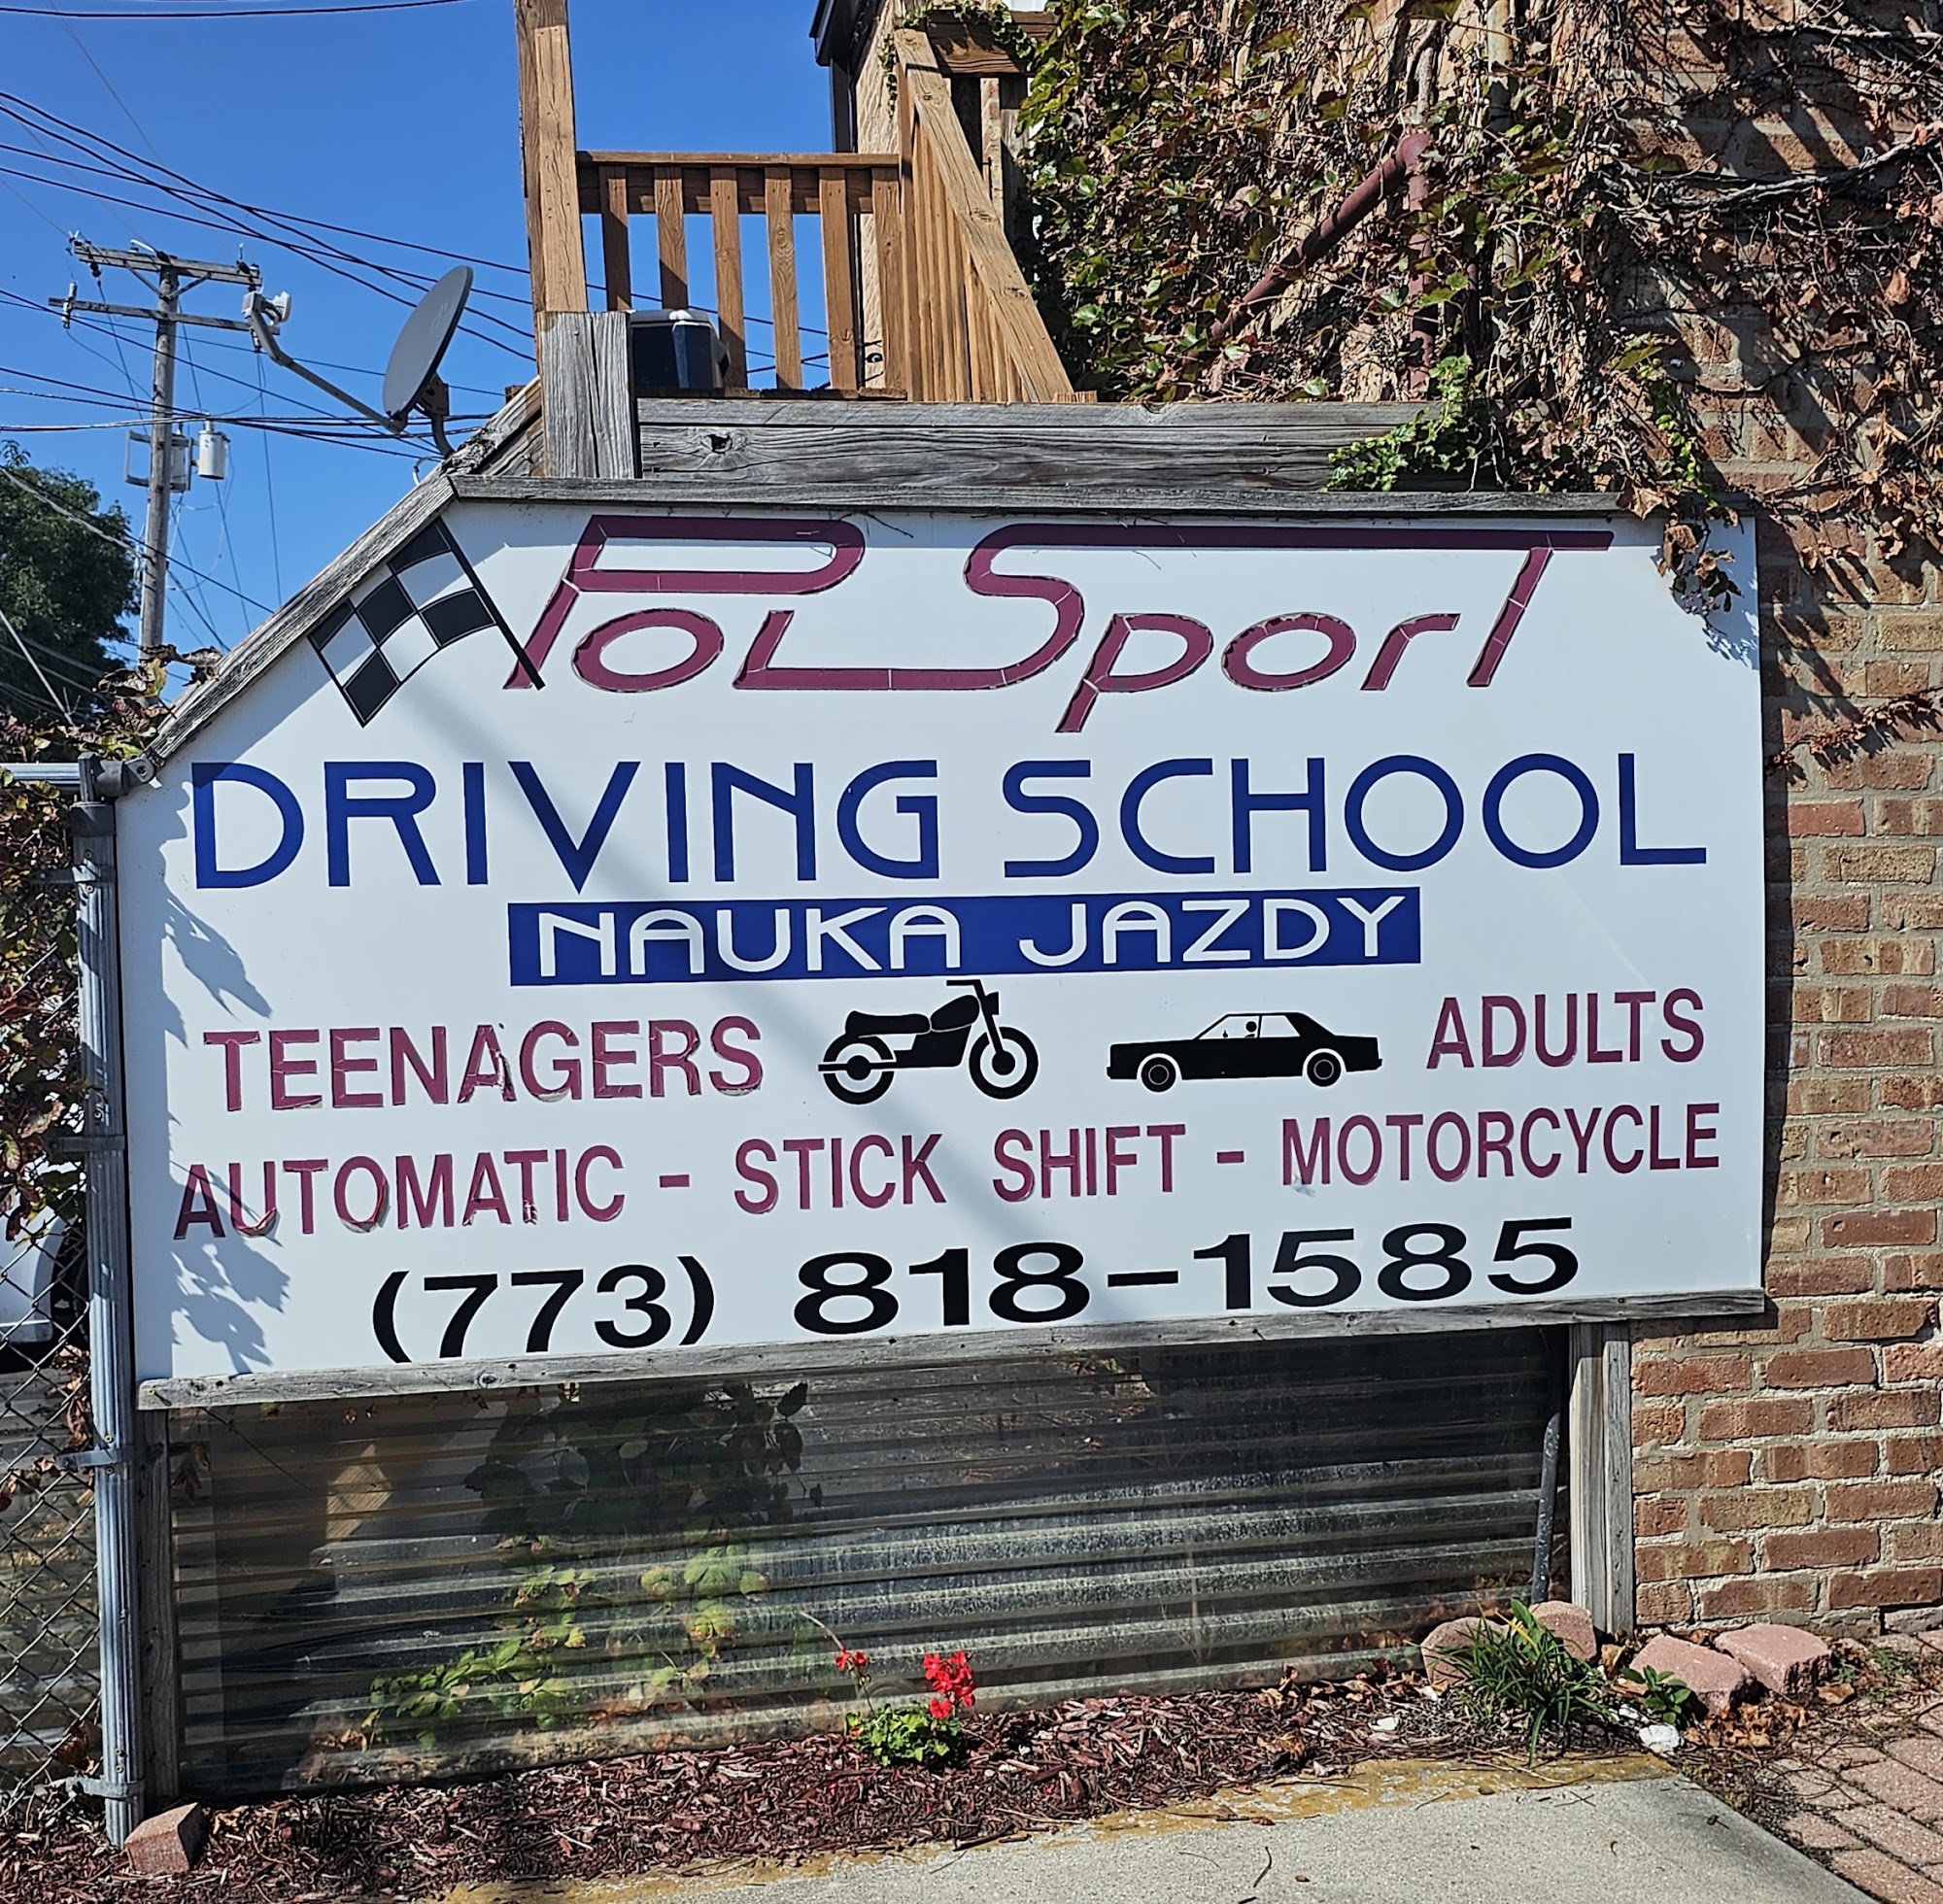 Polsport Driving School